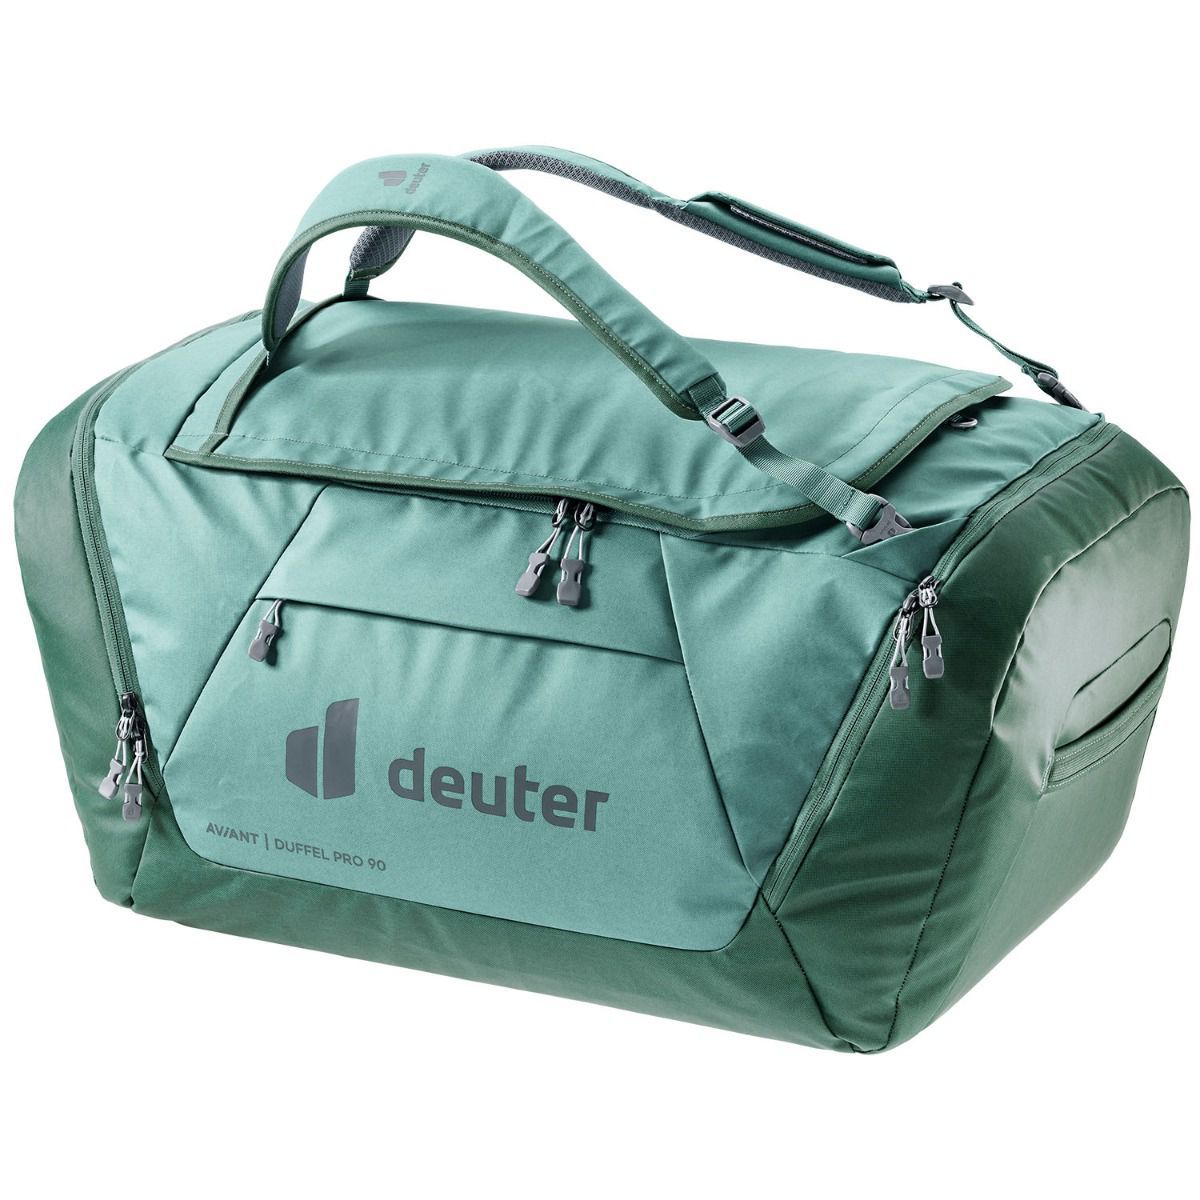 Deuter Aviant Pro Jade-Seagreen Sporttasche 90l